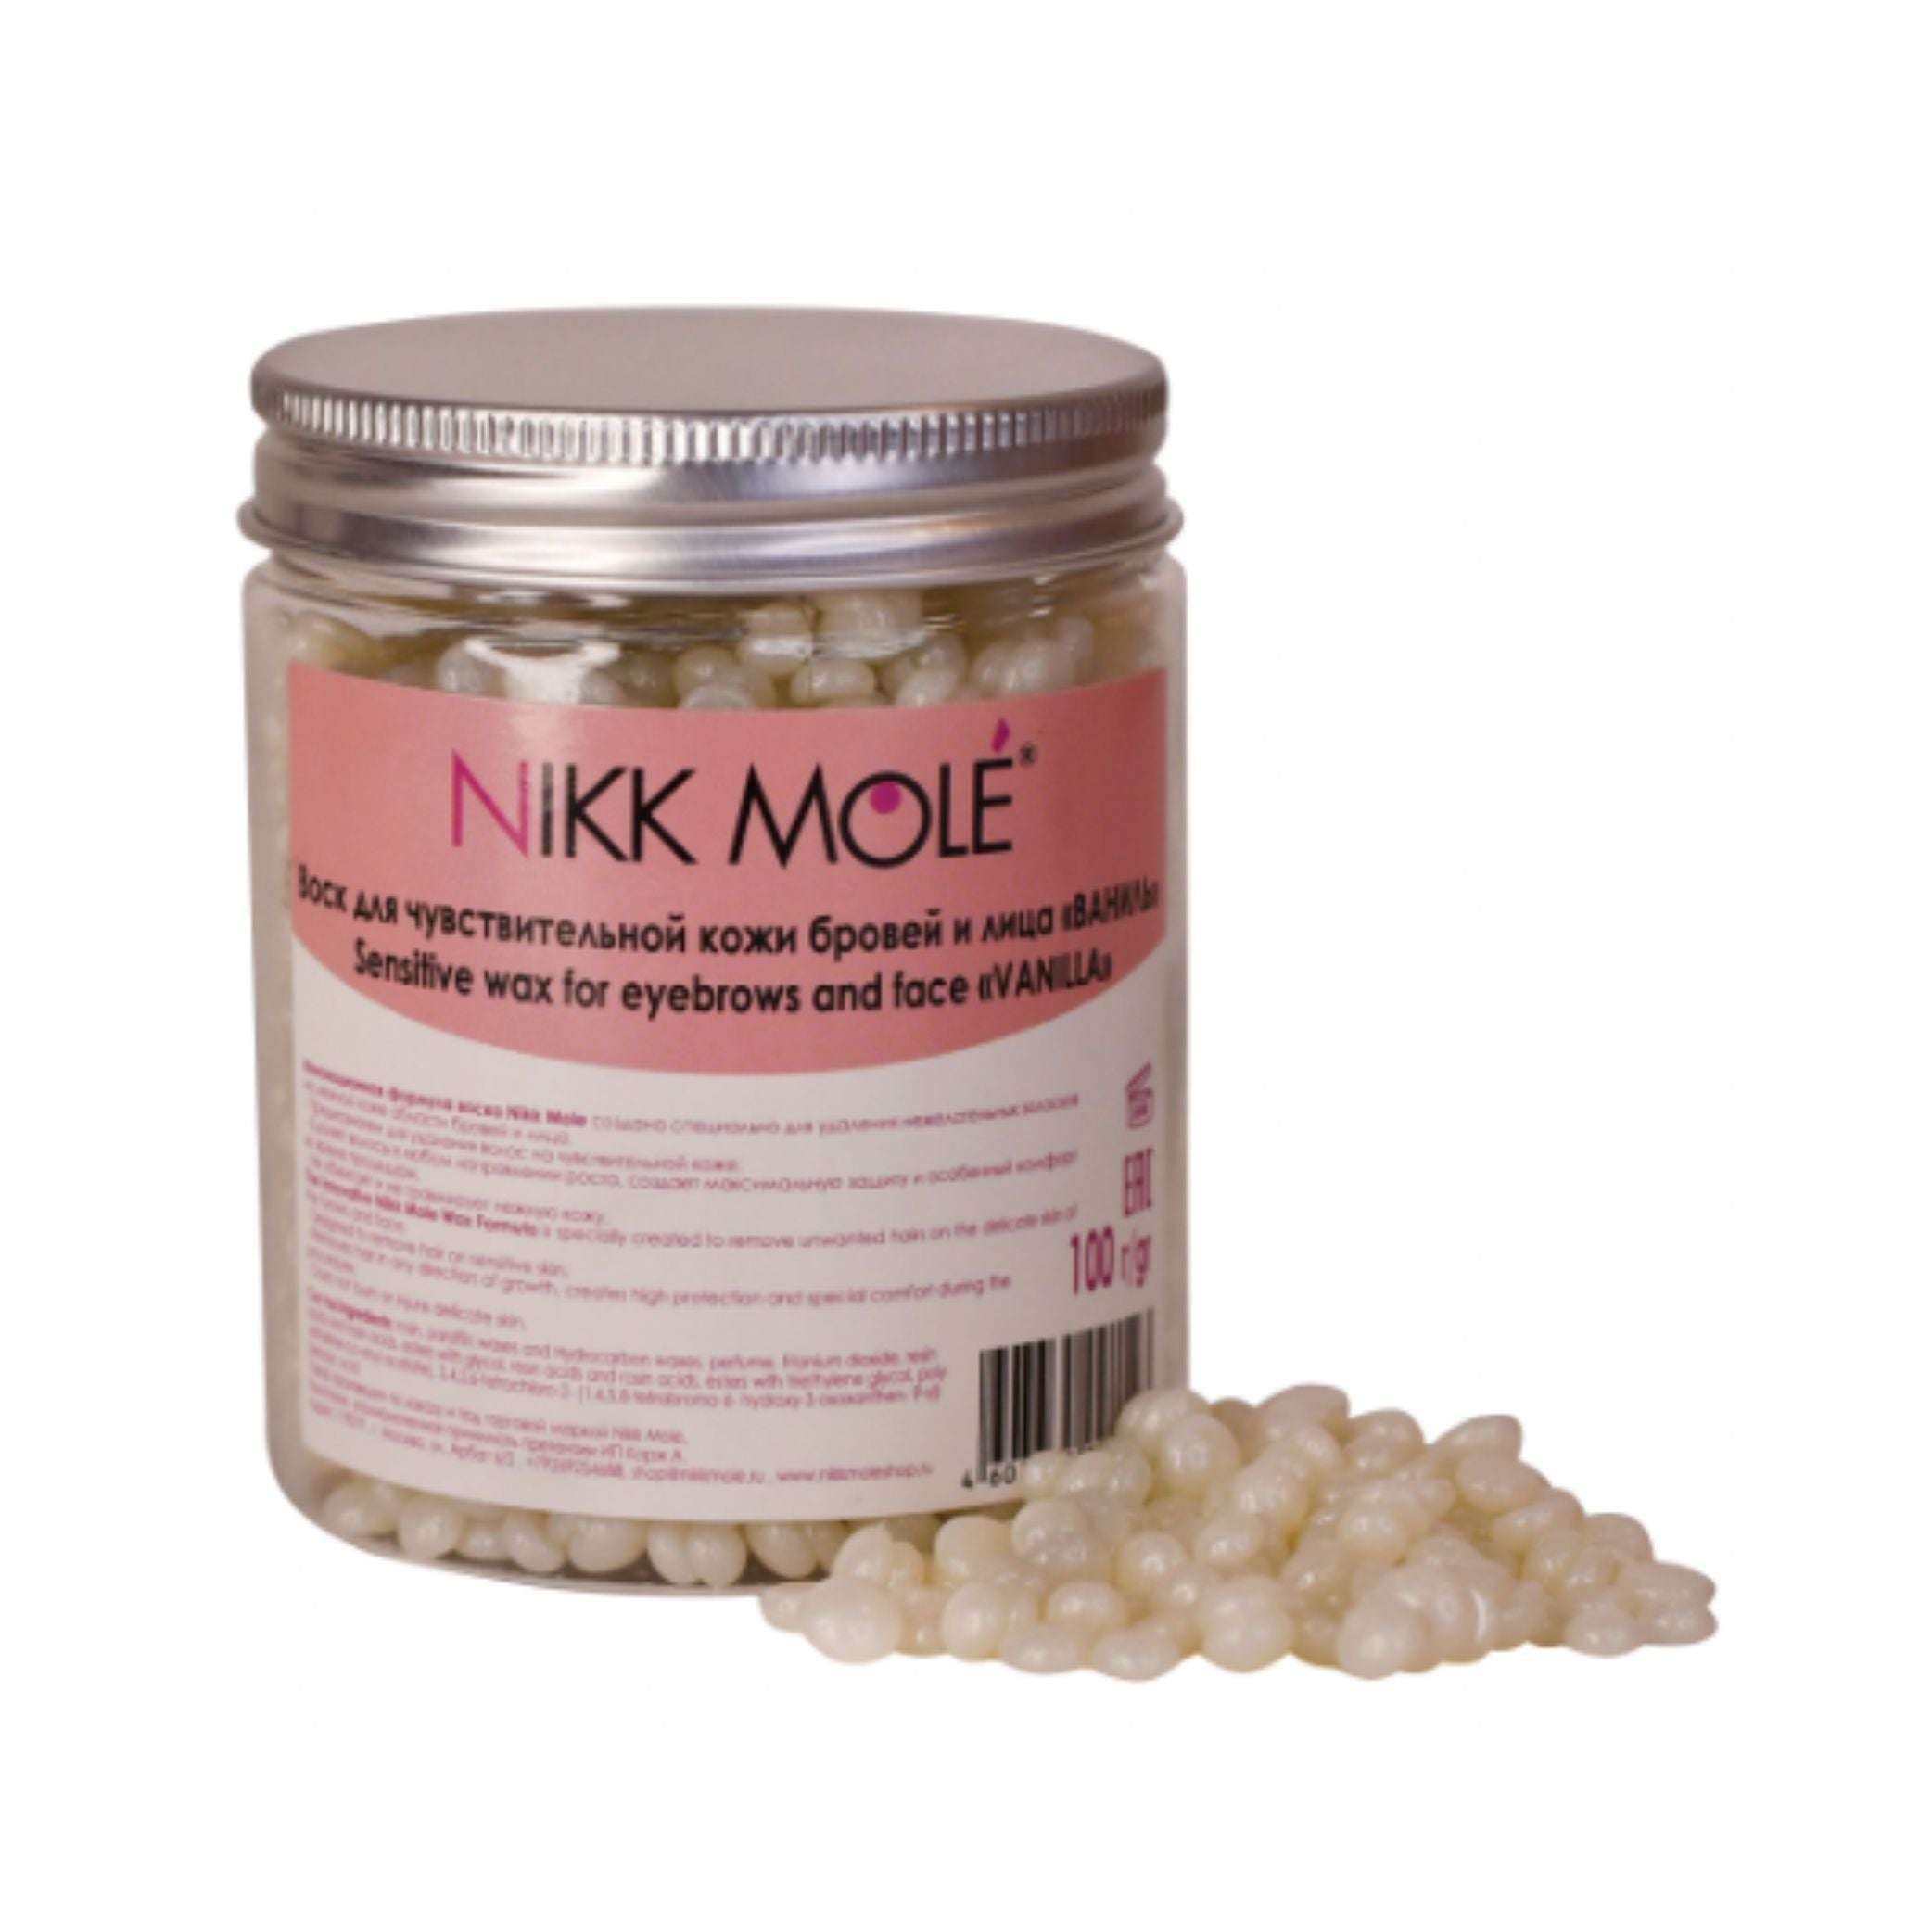 Nikk Mole Wax Pearls